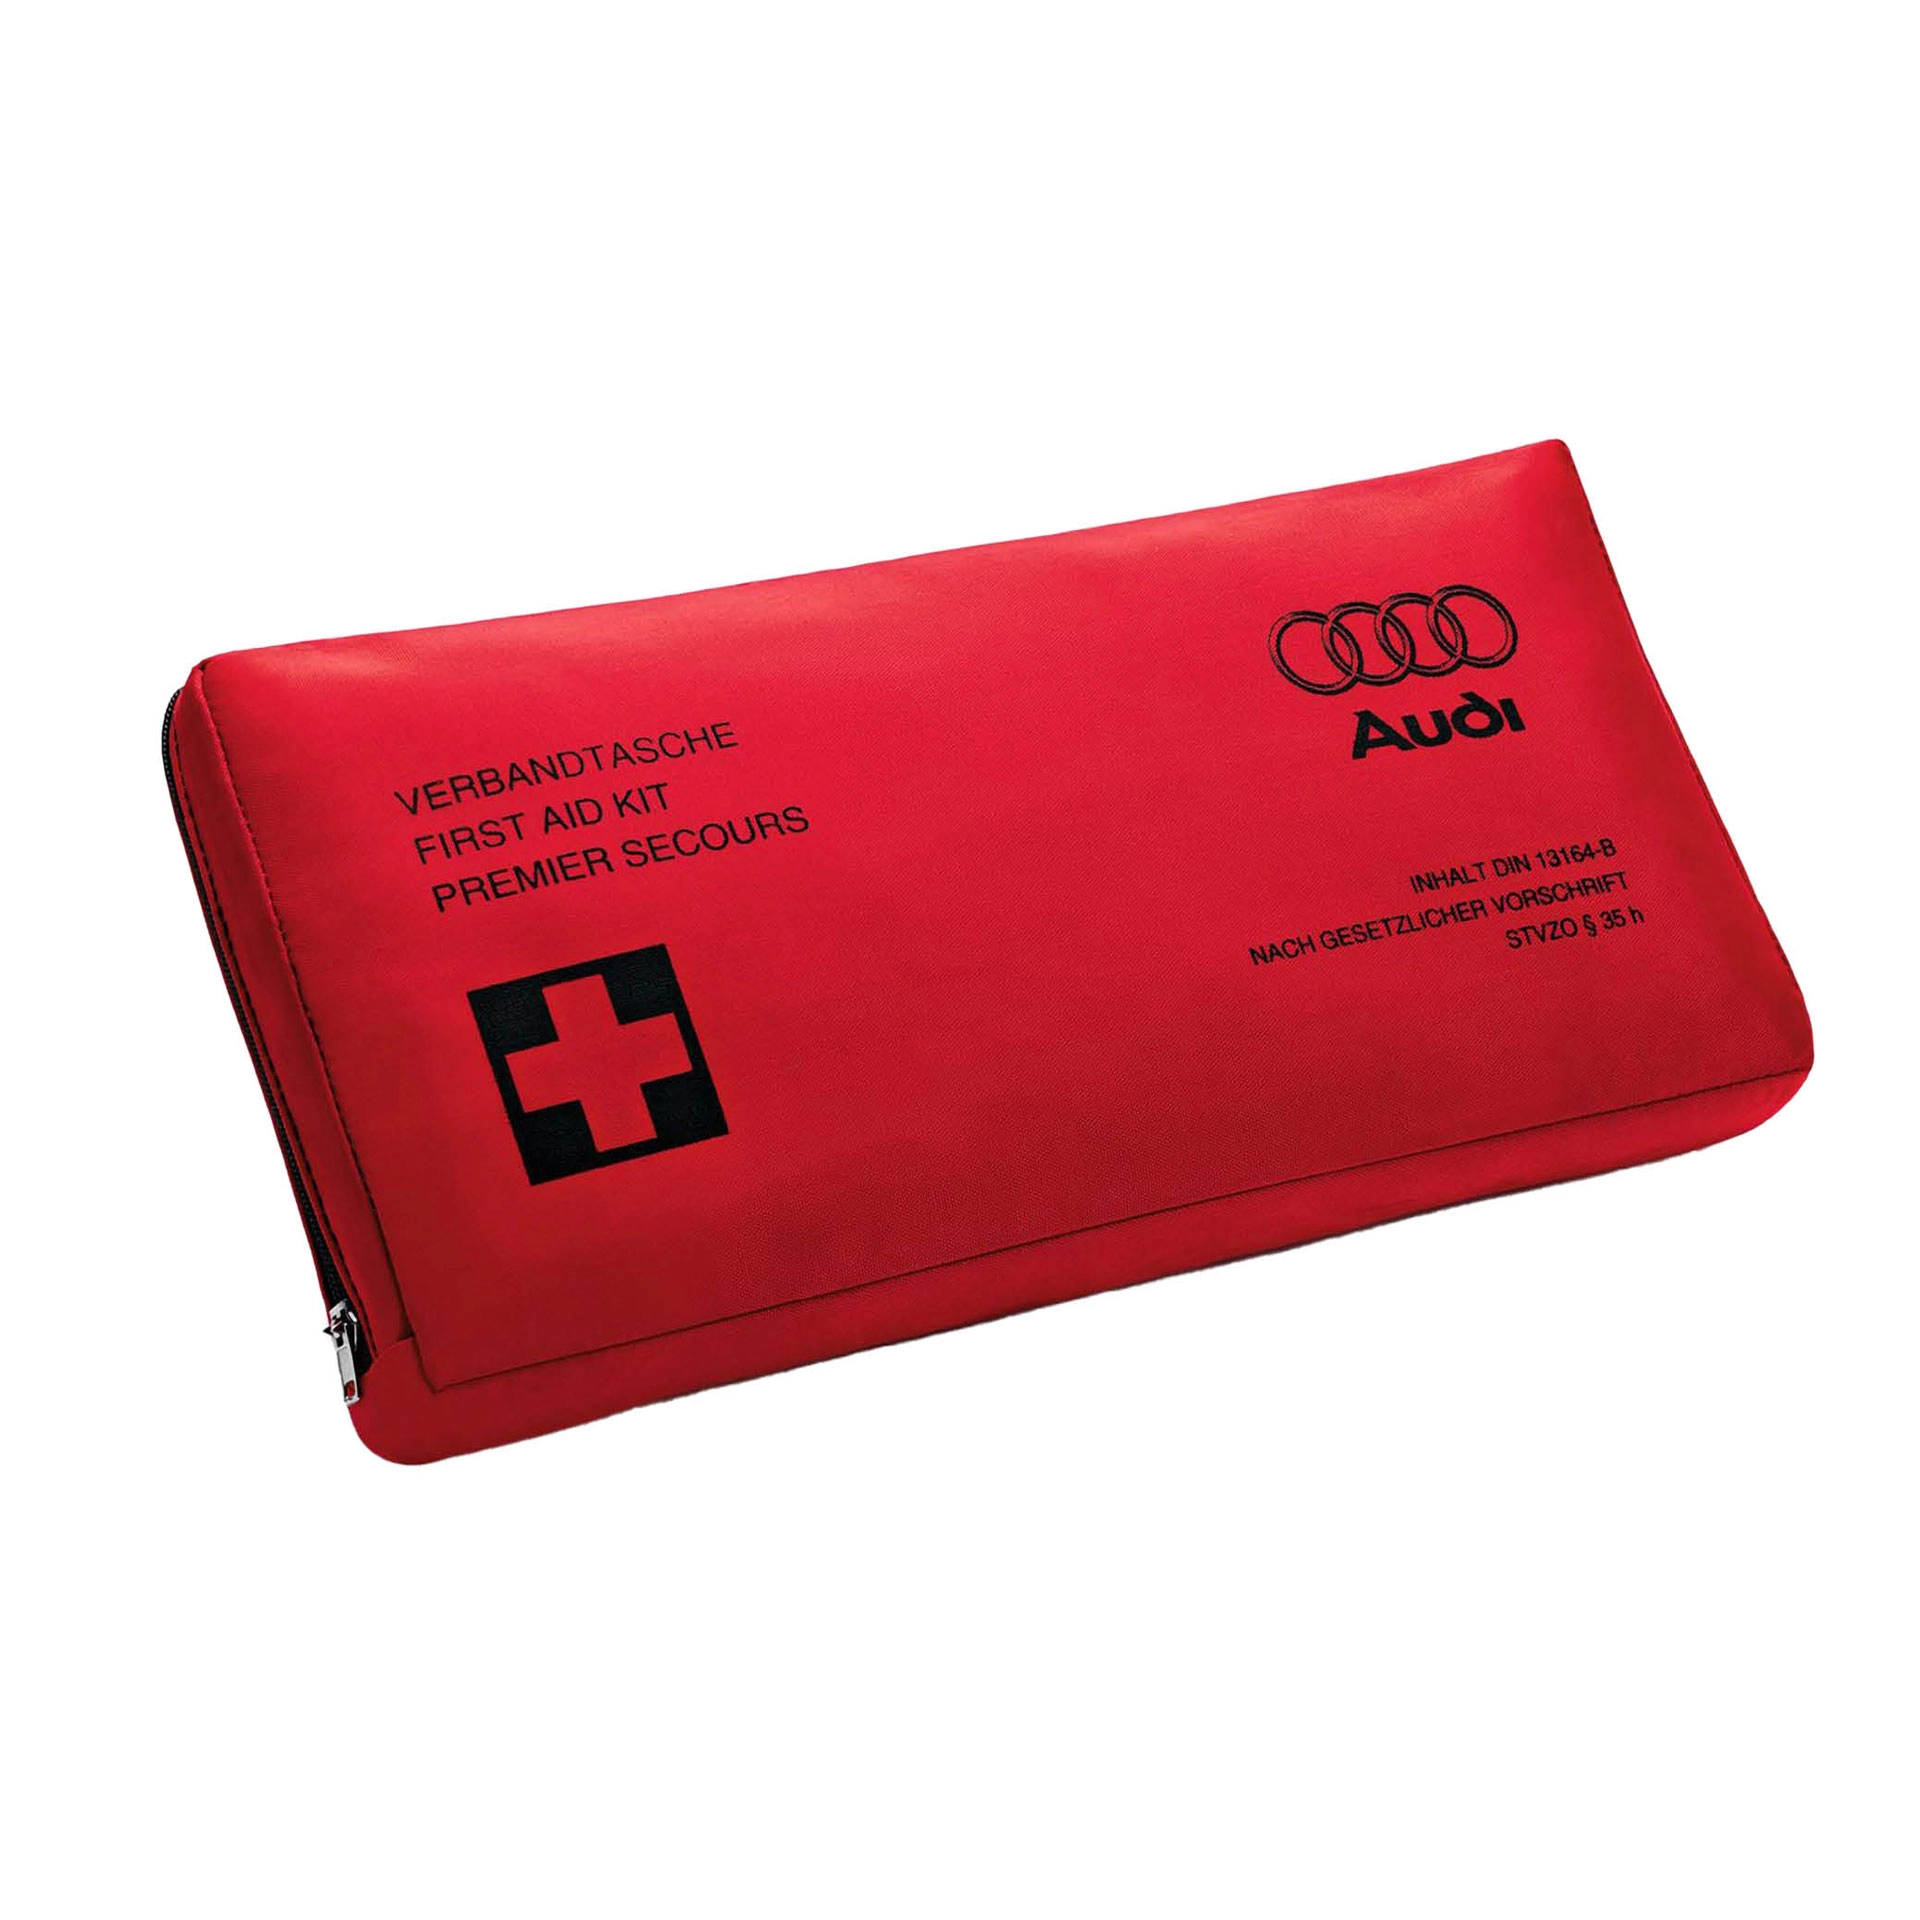 Audi Verbandstasche Erste Hilfe DIN 13 164-2022 Unfall Pannenhilfe 4L0093108D